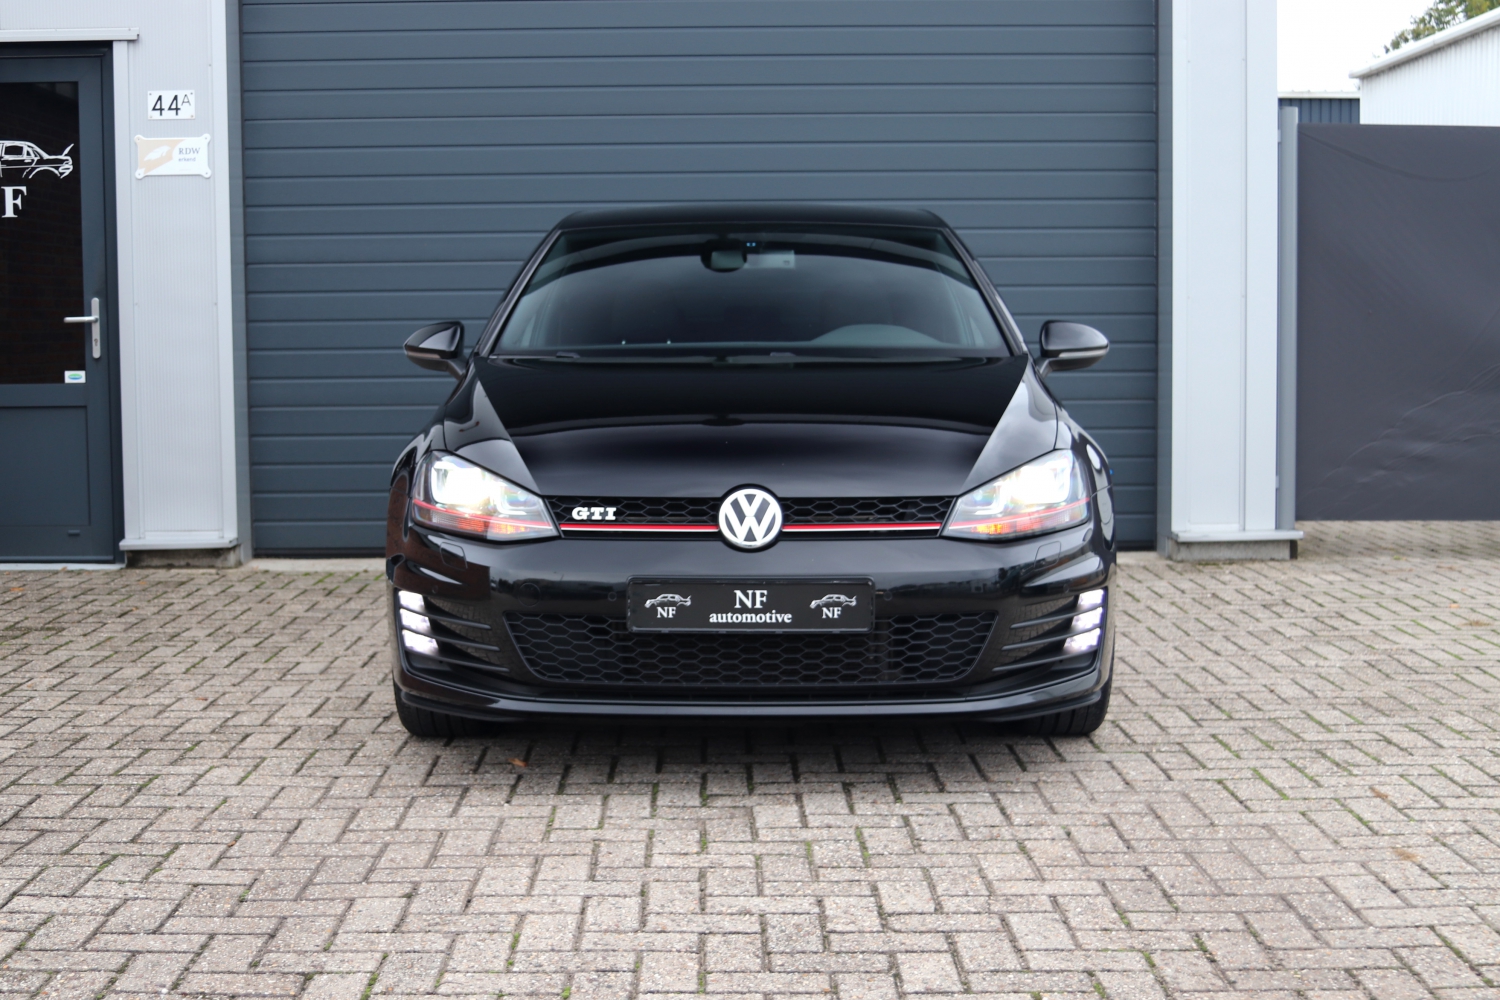 Volkswagen-Golf-7-GTI-2013-2-006.JPG